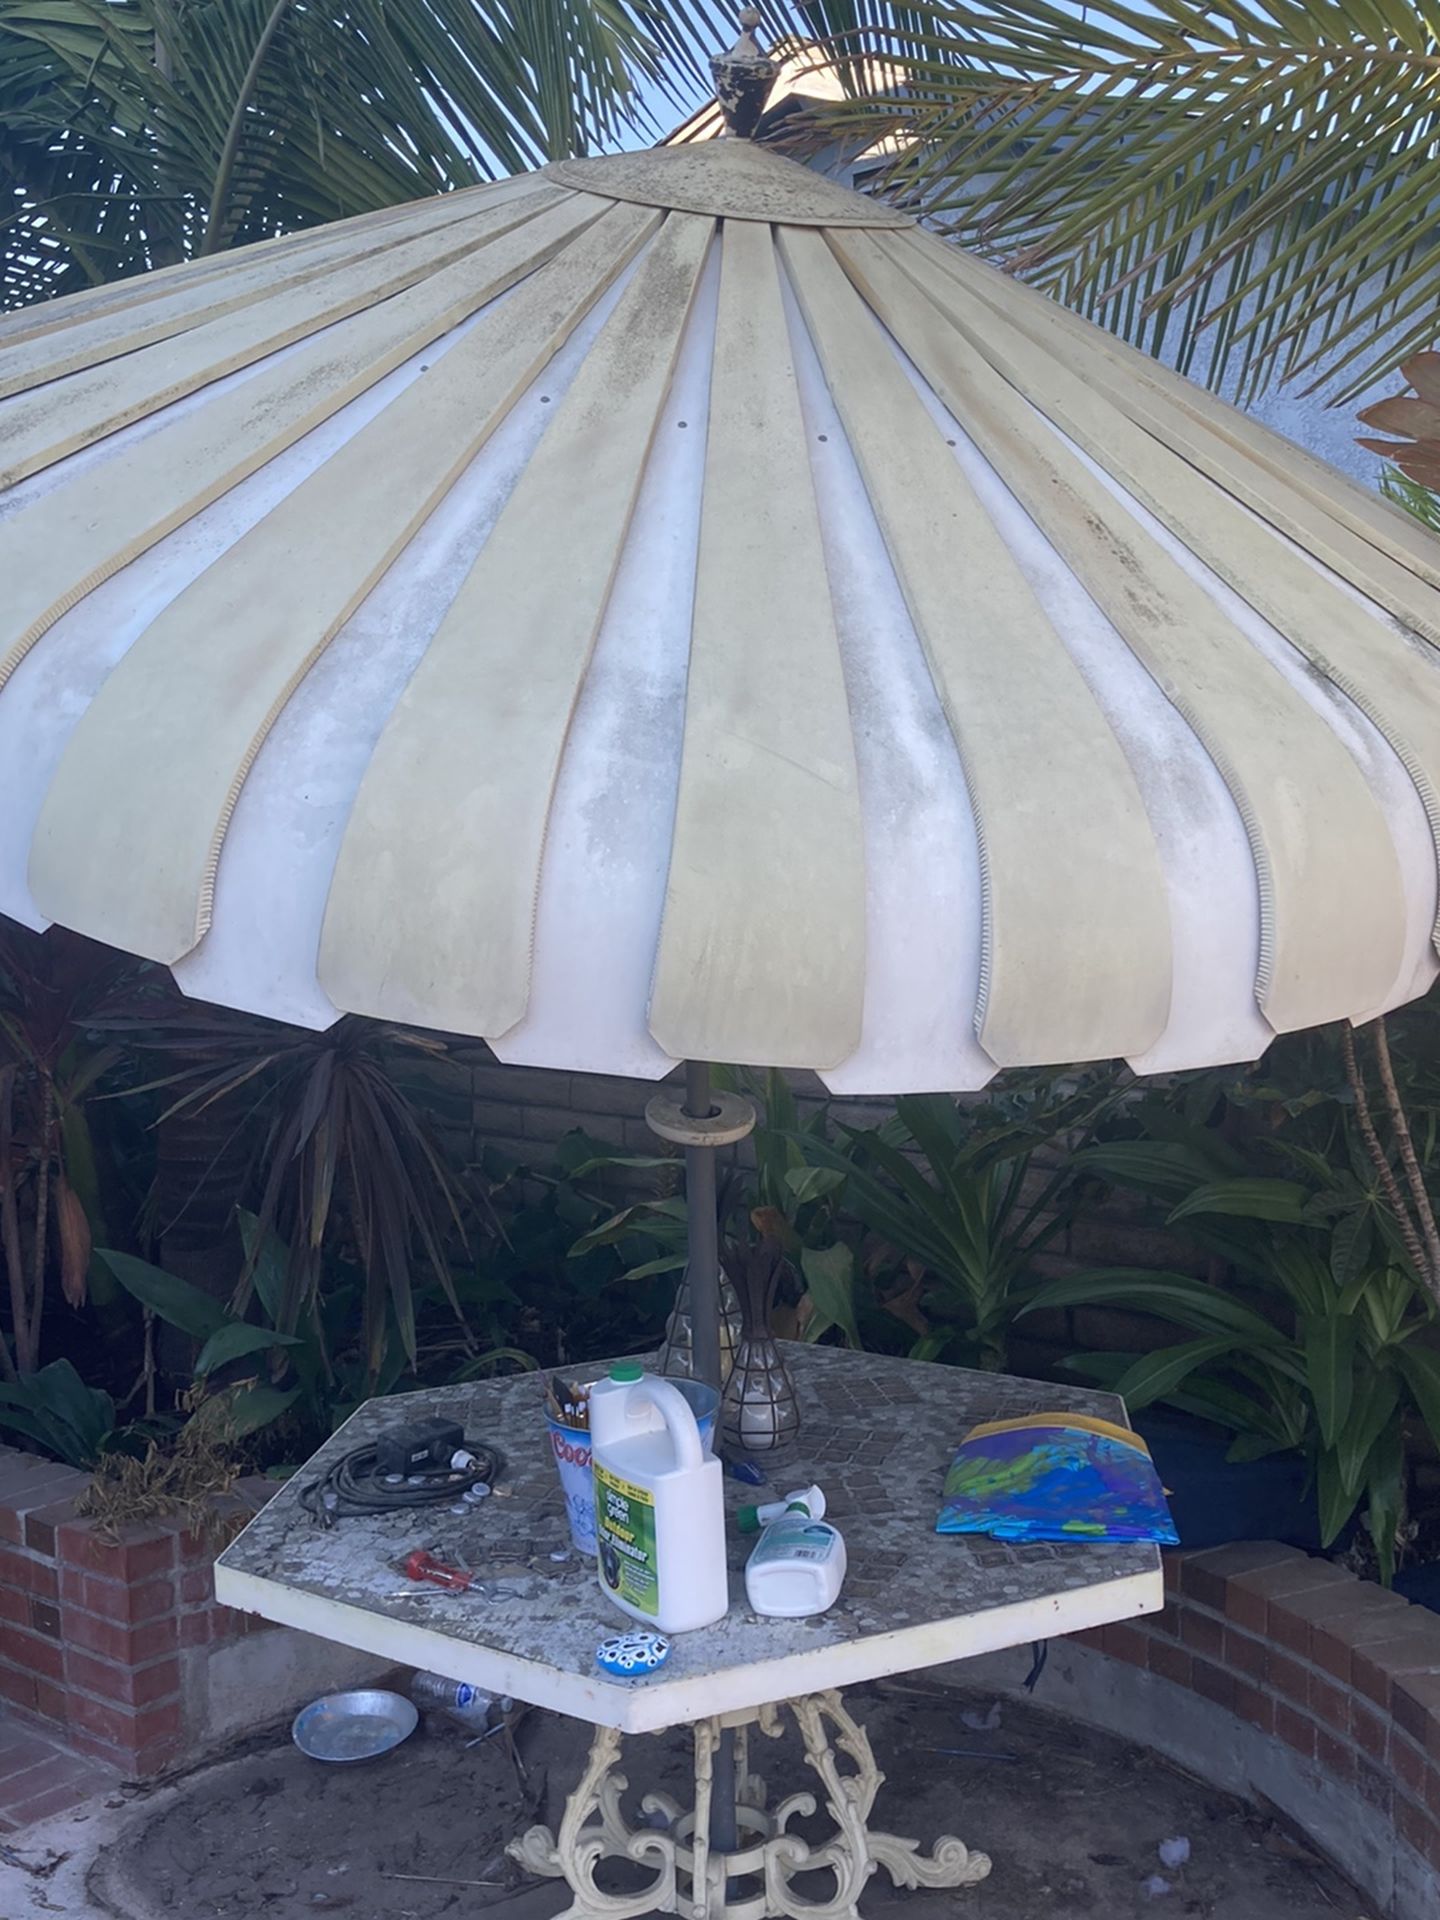 Vintage Umbrella And Patio Furniture